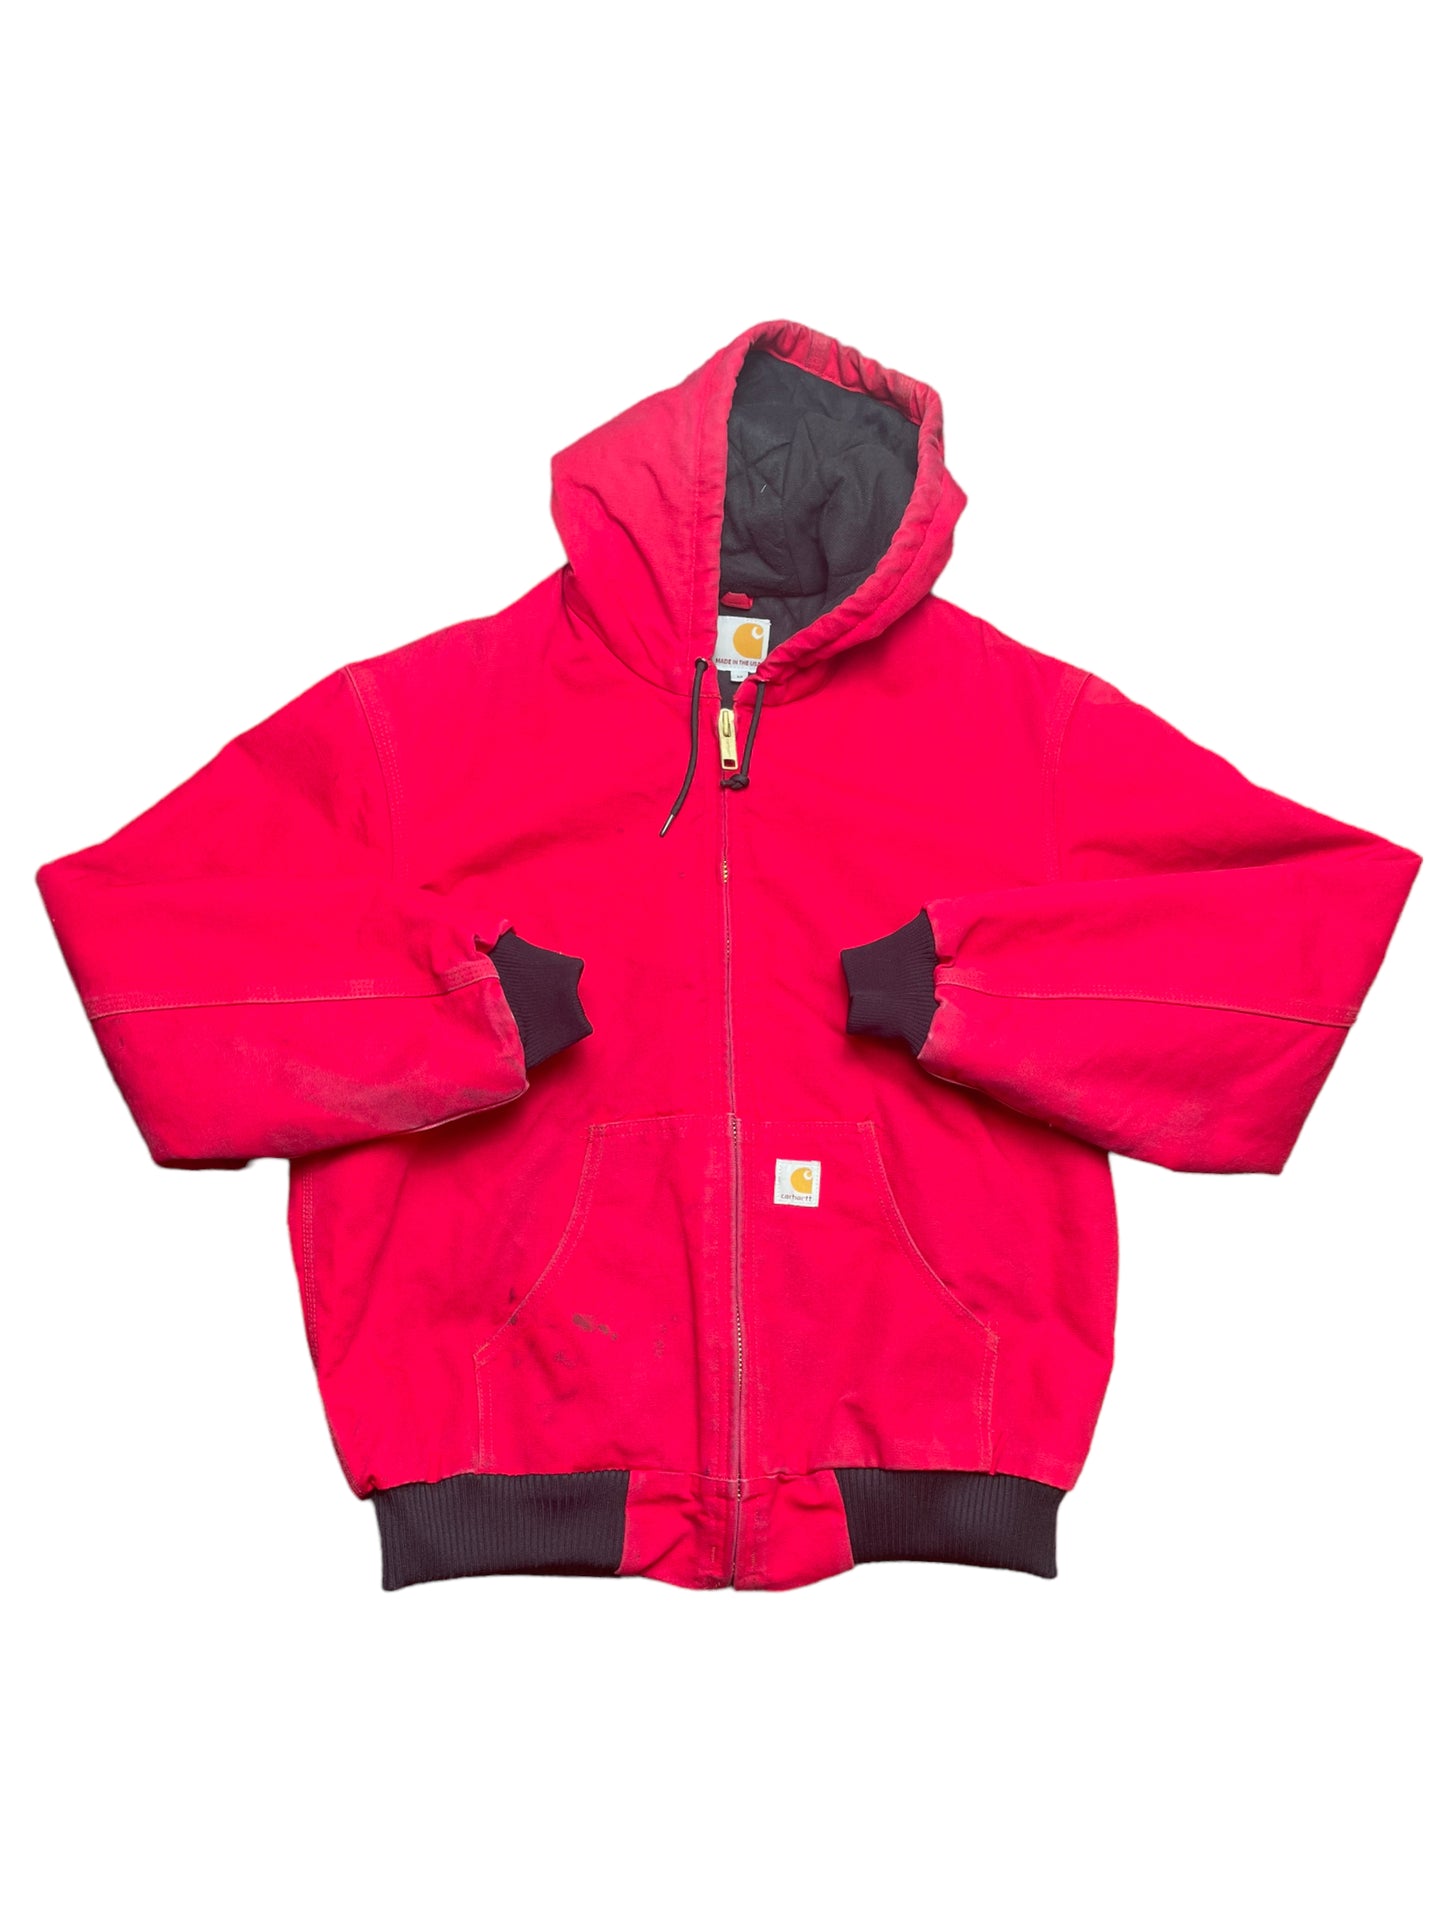 Vintage 90s Red Carhartt Hooded Jacket Medium